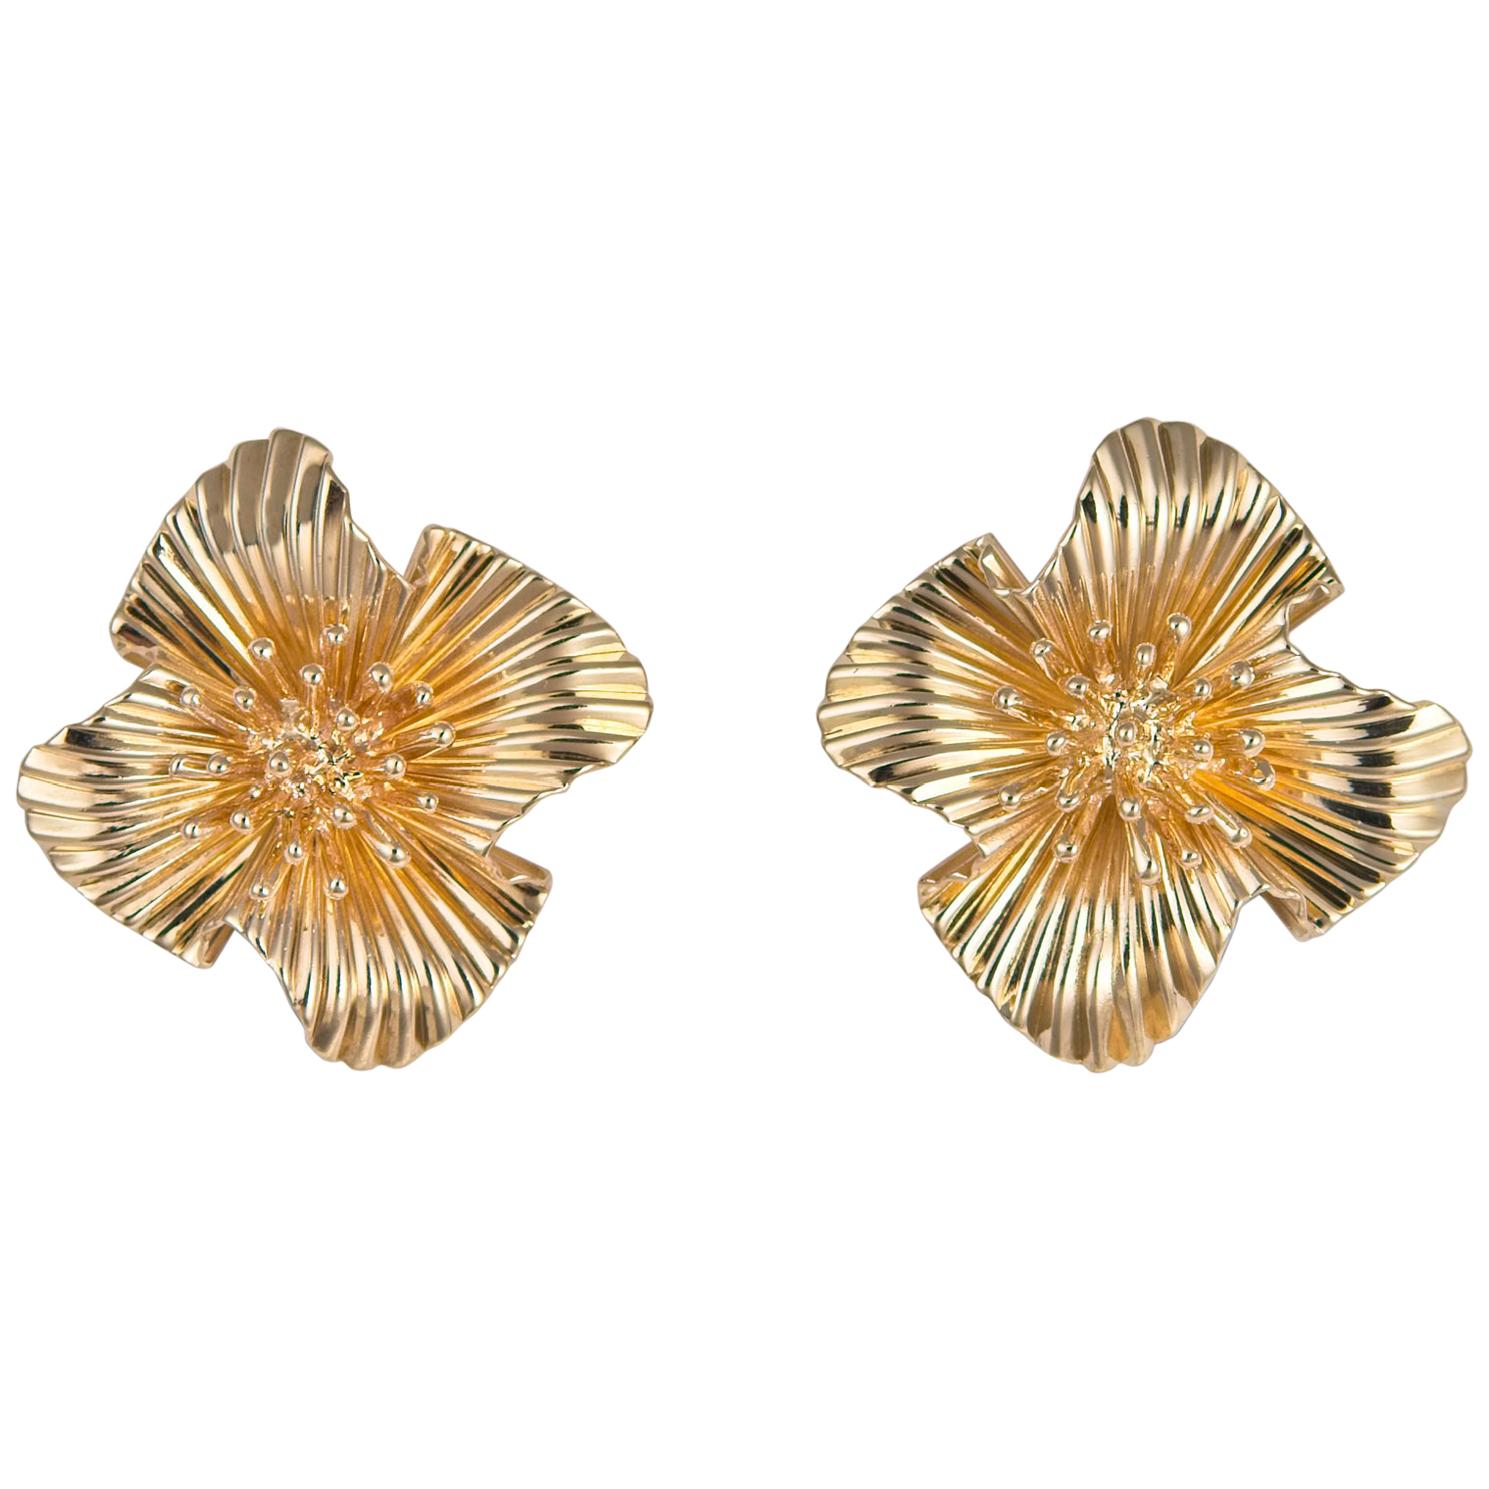 Vintage Tiffany & Co. Gold Floral Motif Earrings